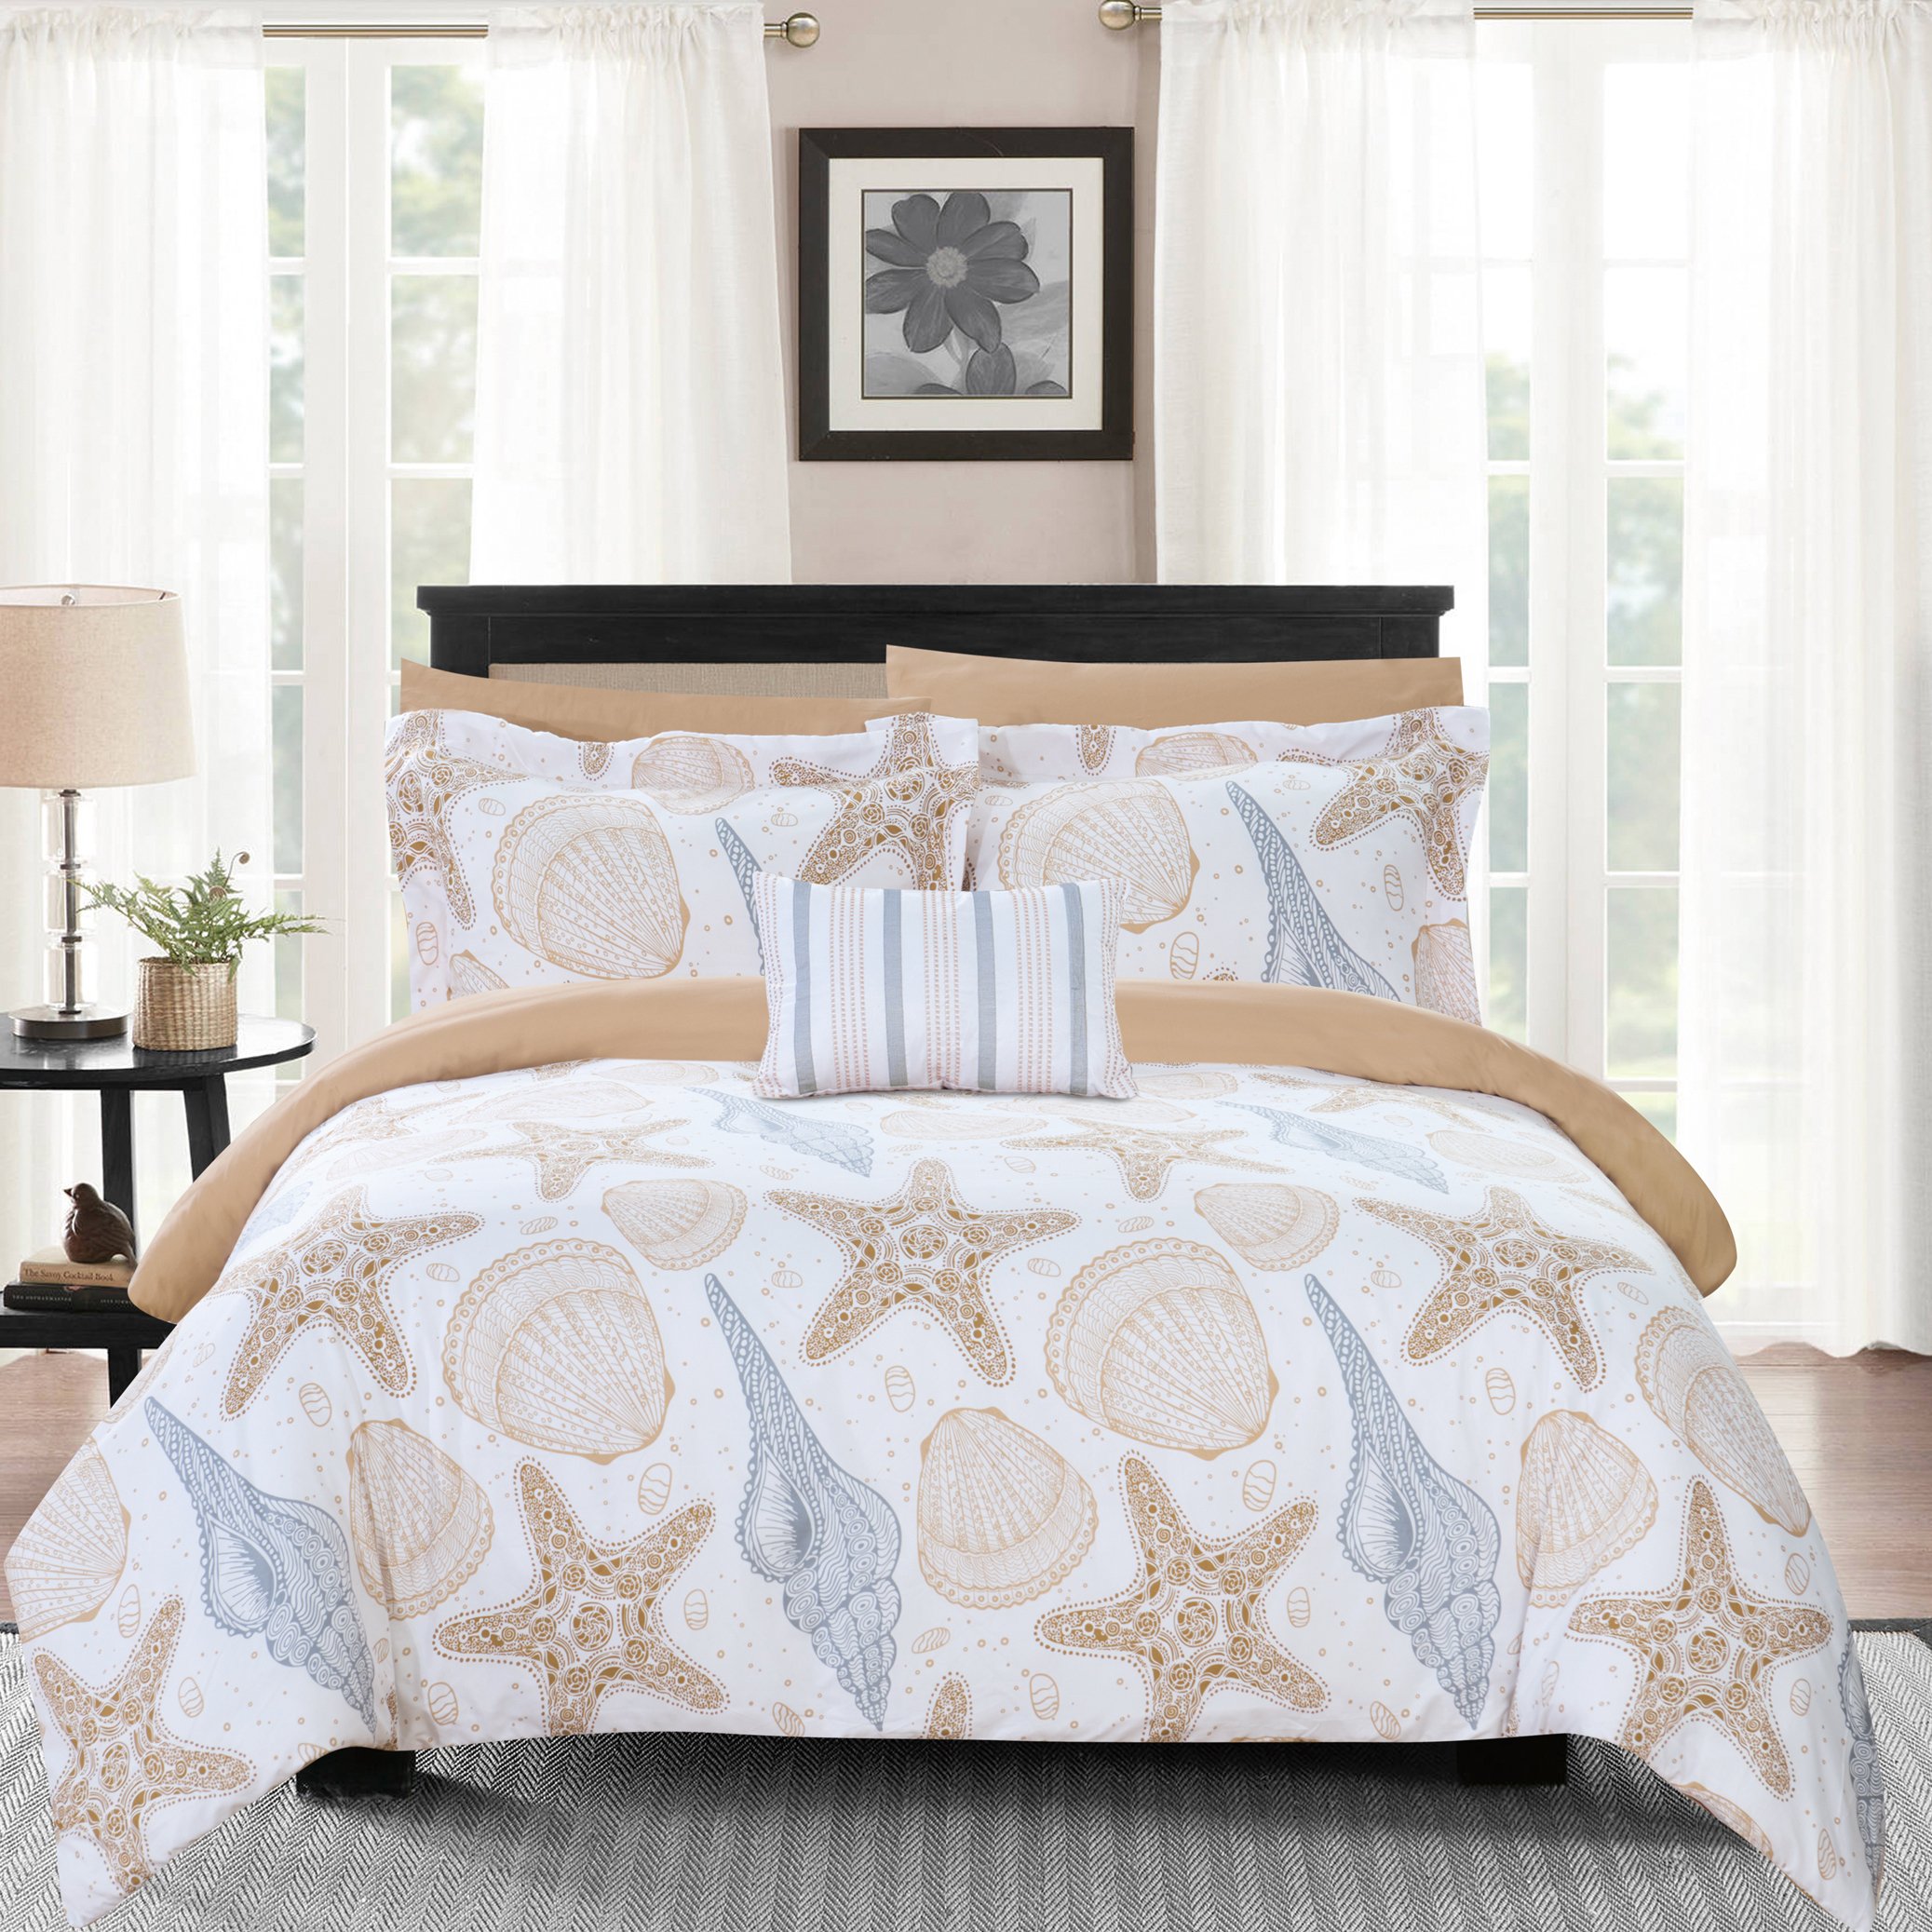 8 Or 6 Piece Reversible Comforter Set Sea, Sand, Surf Theme Print Design Bed In A Bag - Beige, King